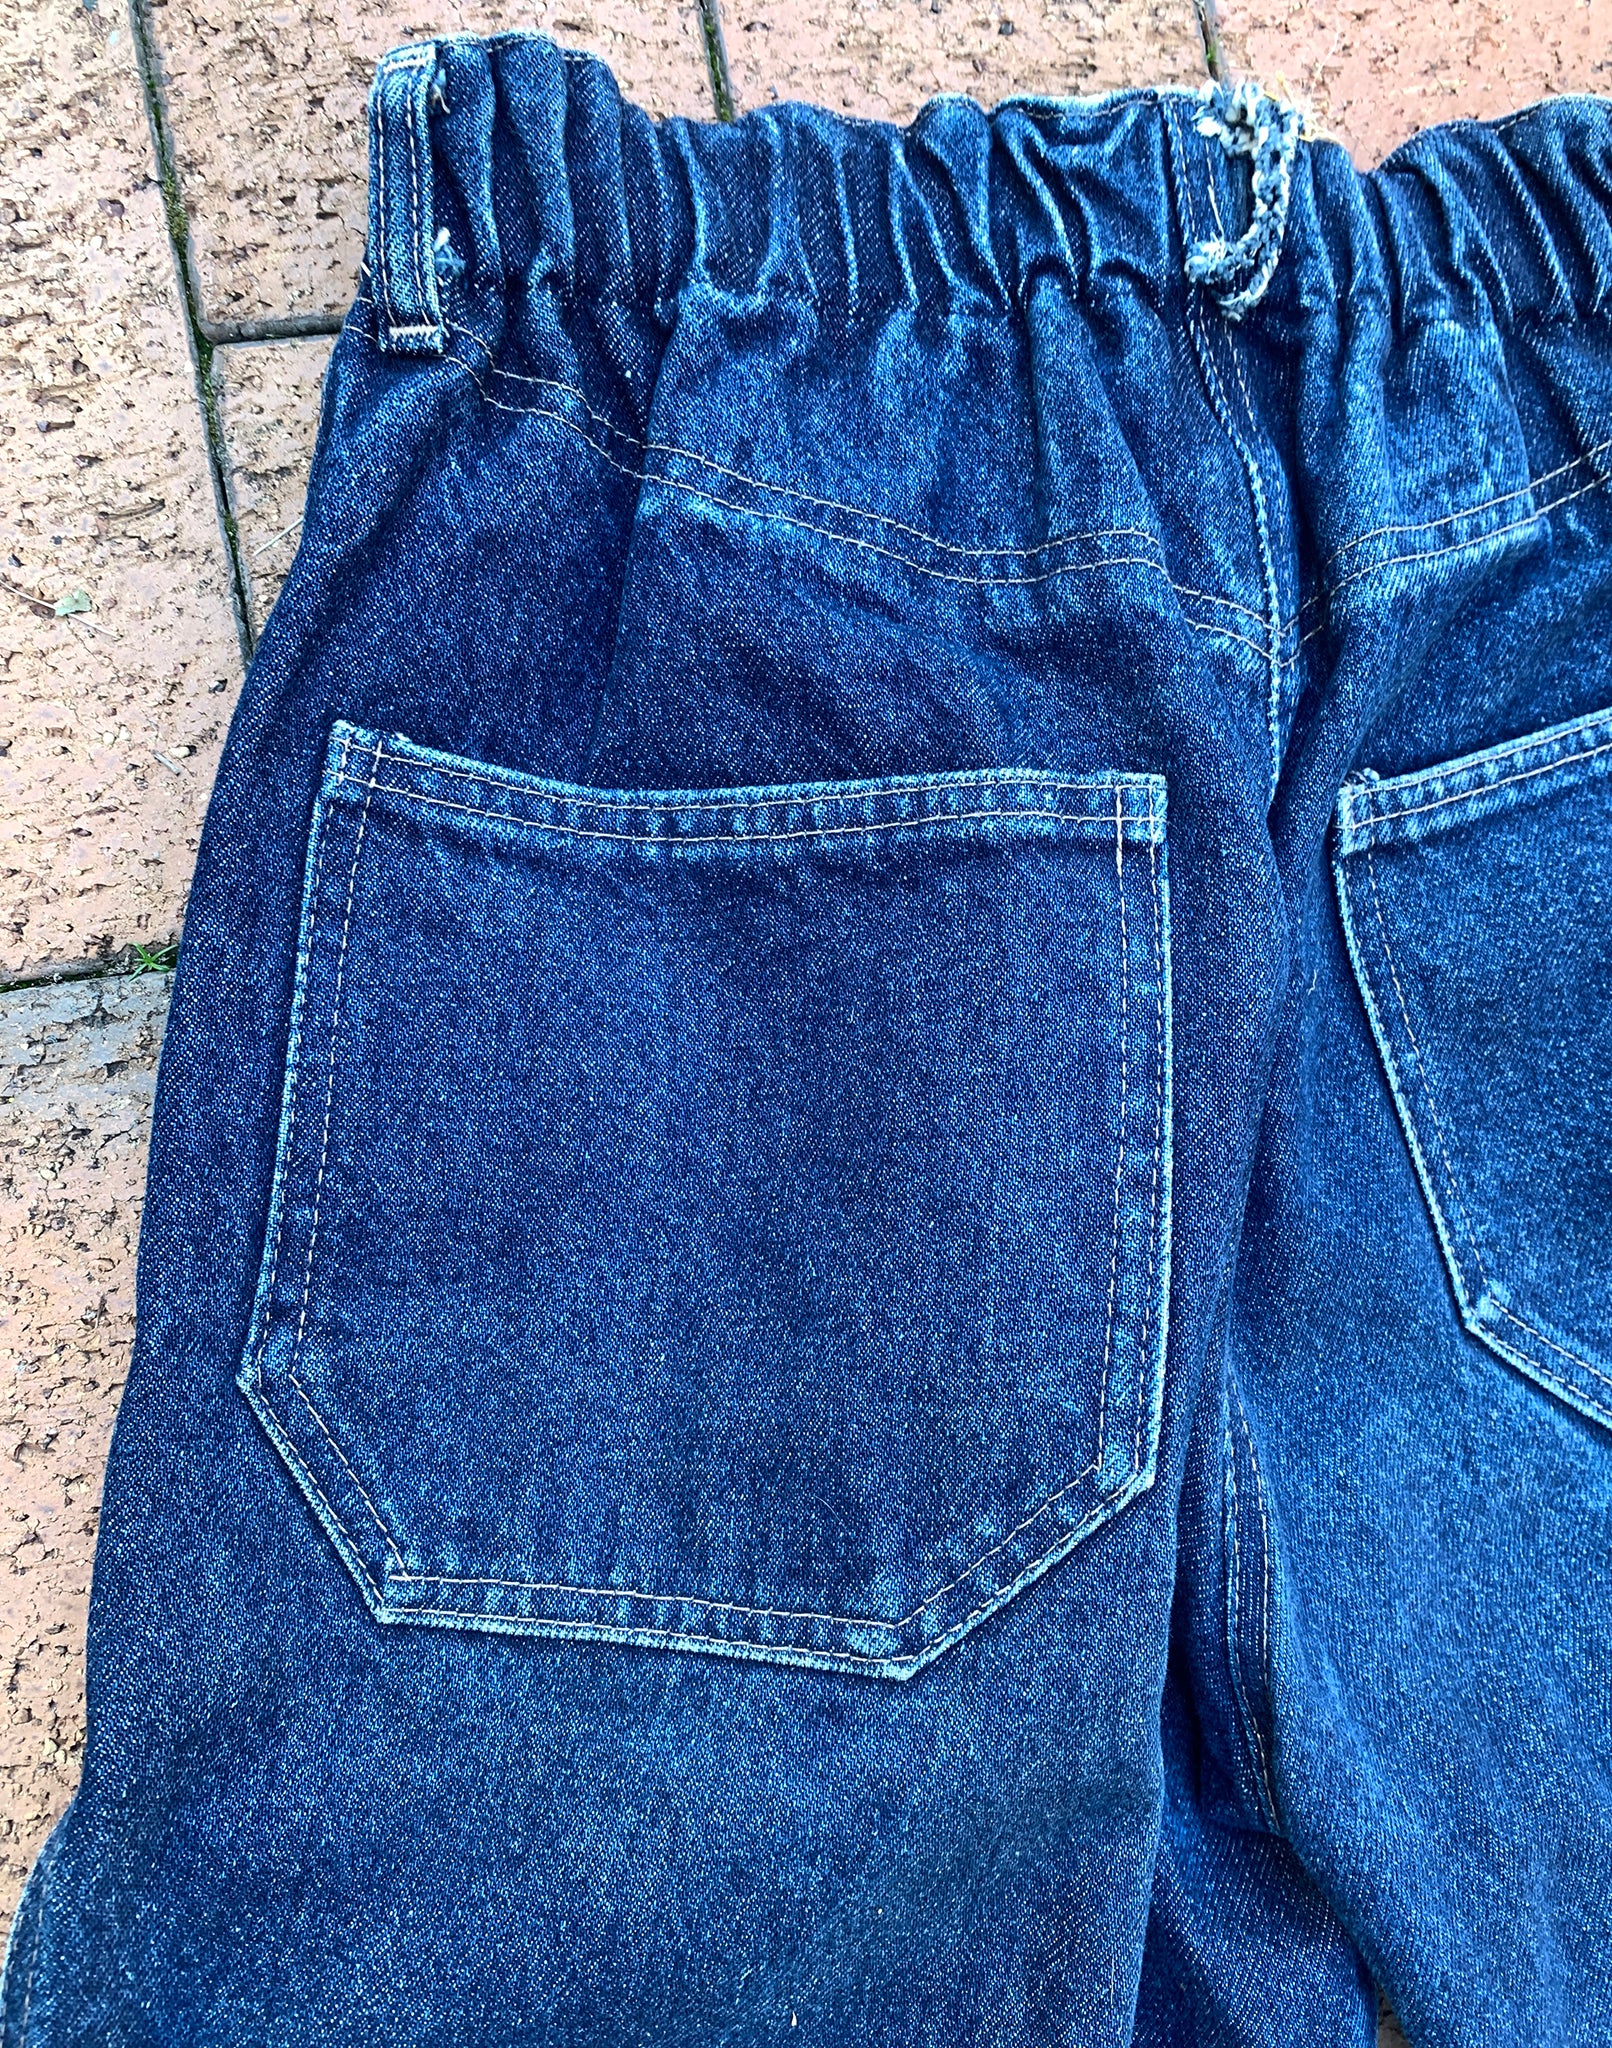 Vintage 80's Geiger Down Under Denim Long Shorts - Size S